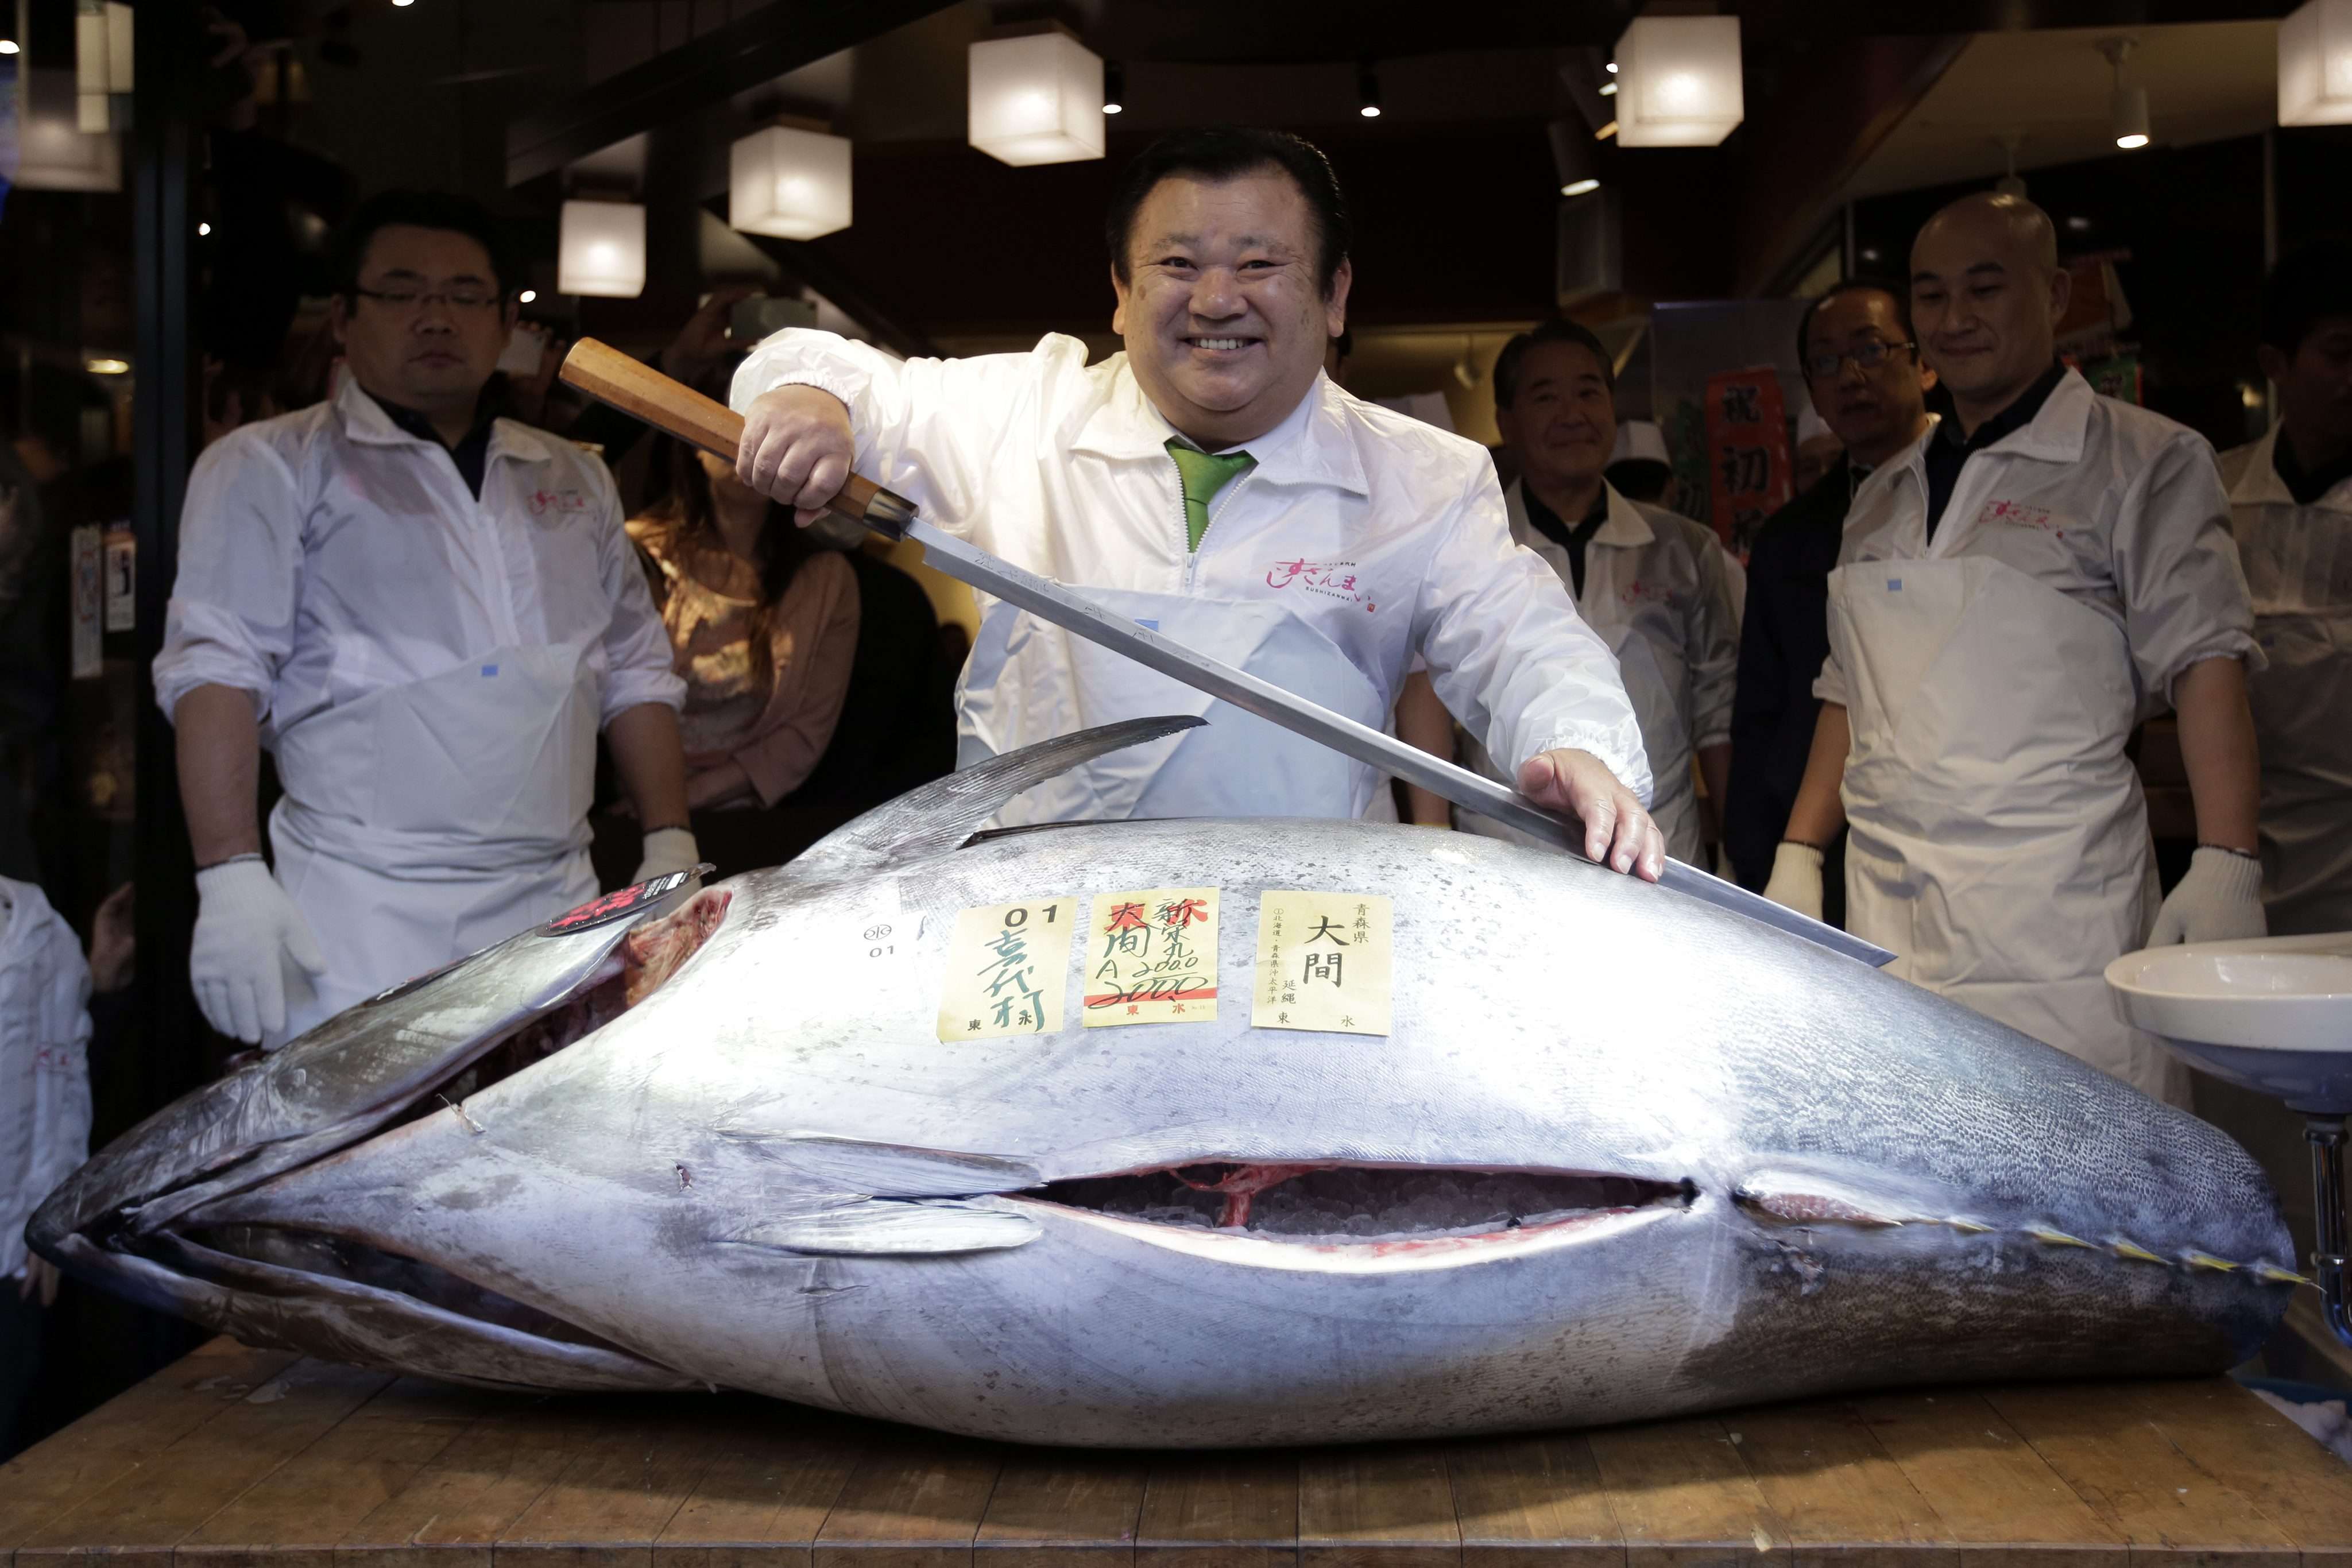 Tokyo’s Tsukiji fish market is renowned for tuna auctions. Photo: EPA